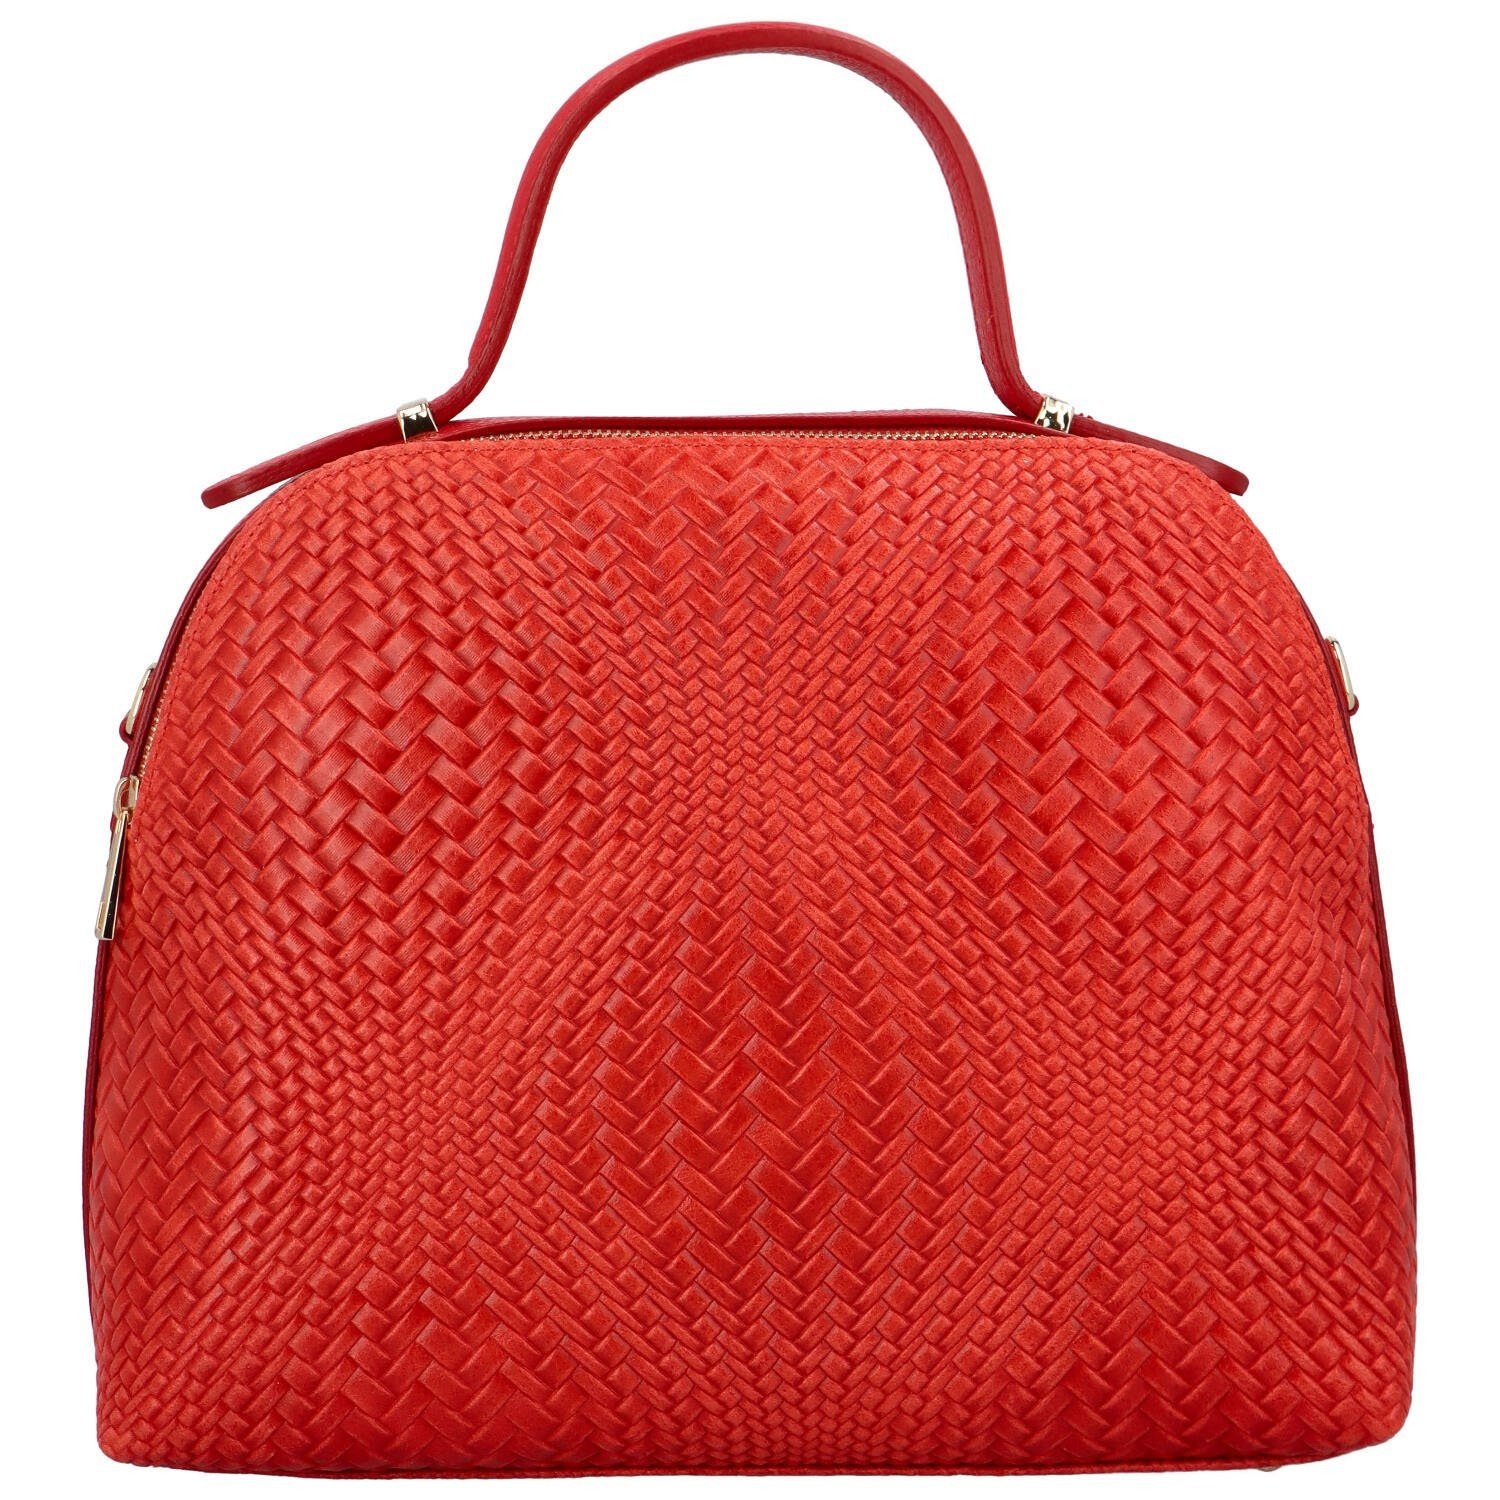 Dámská kožená kabelka do ruky červená - Delami Capeta červená